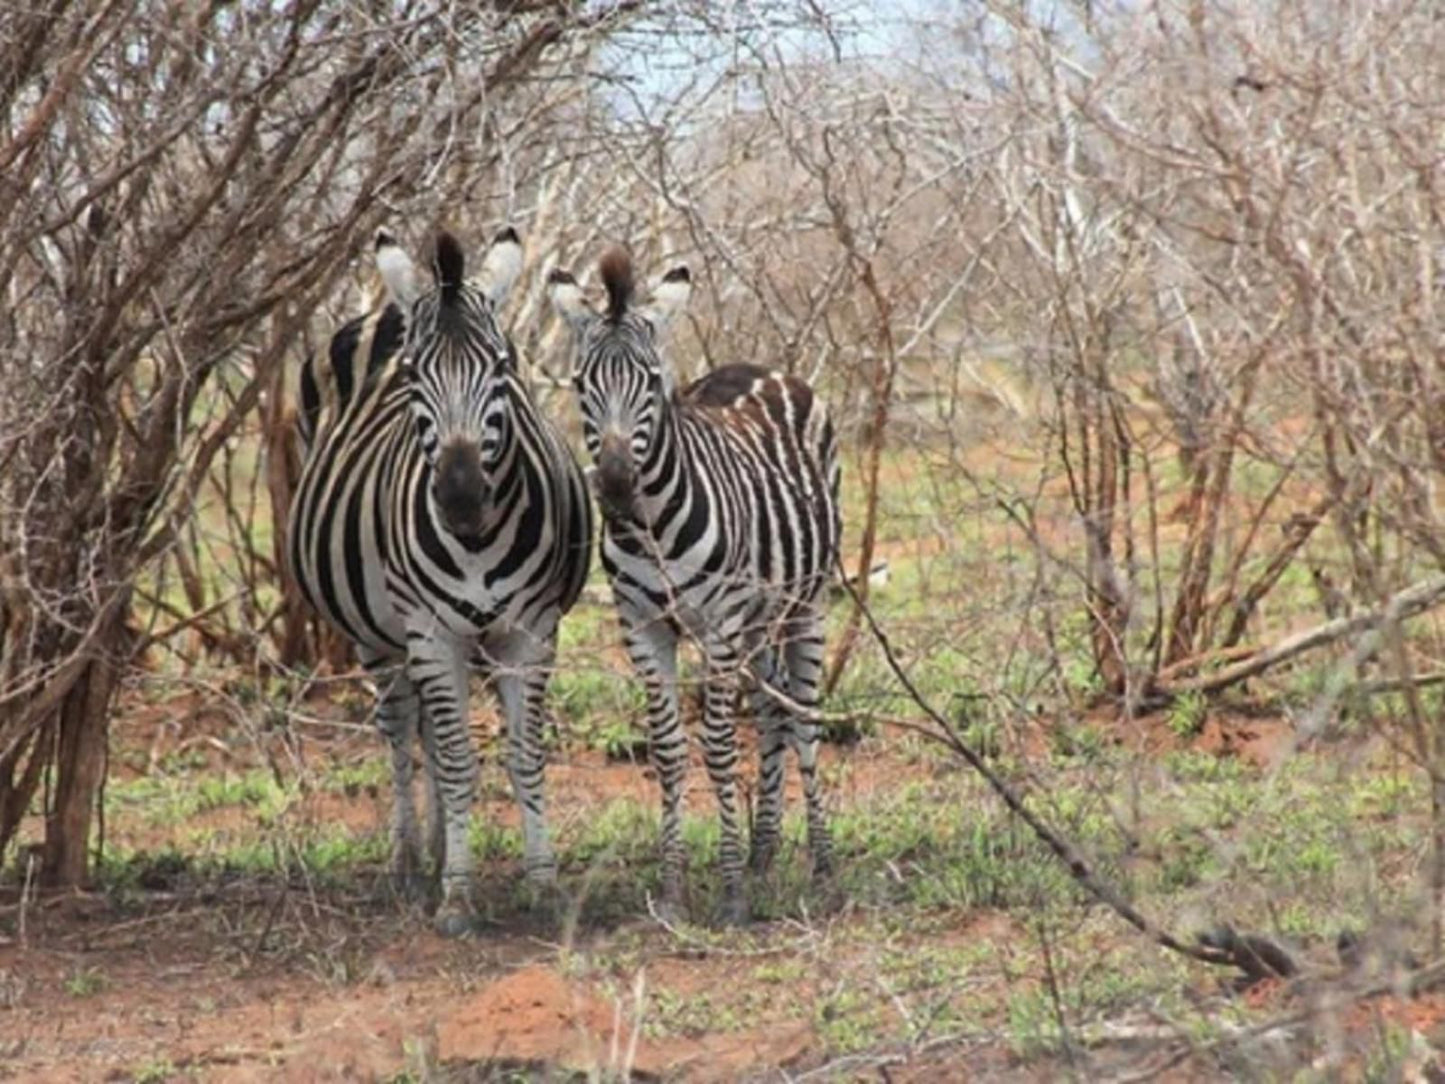 Orchards Farm Cottages Komatipoort Mpumalanga South Africa Zebra, Mammal, Animal, Herbivore